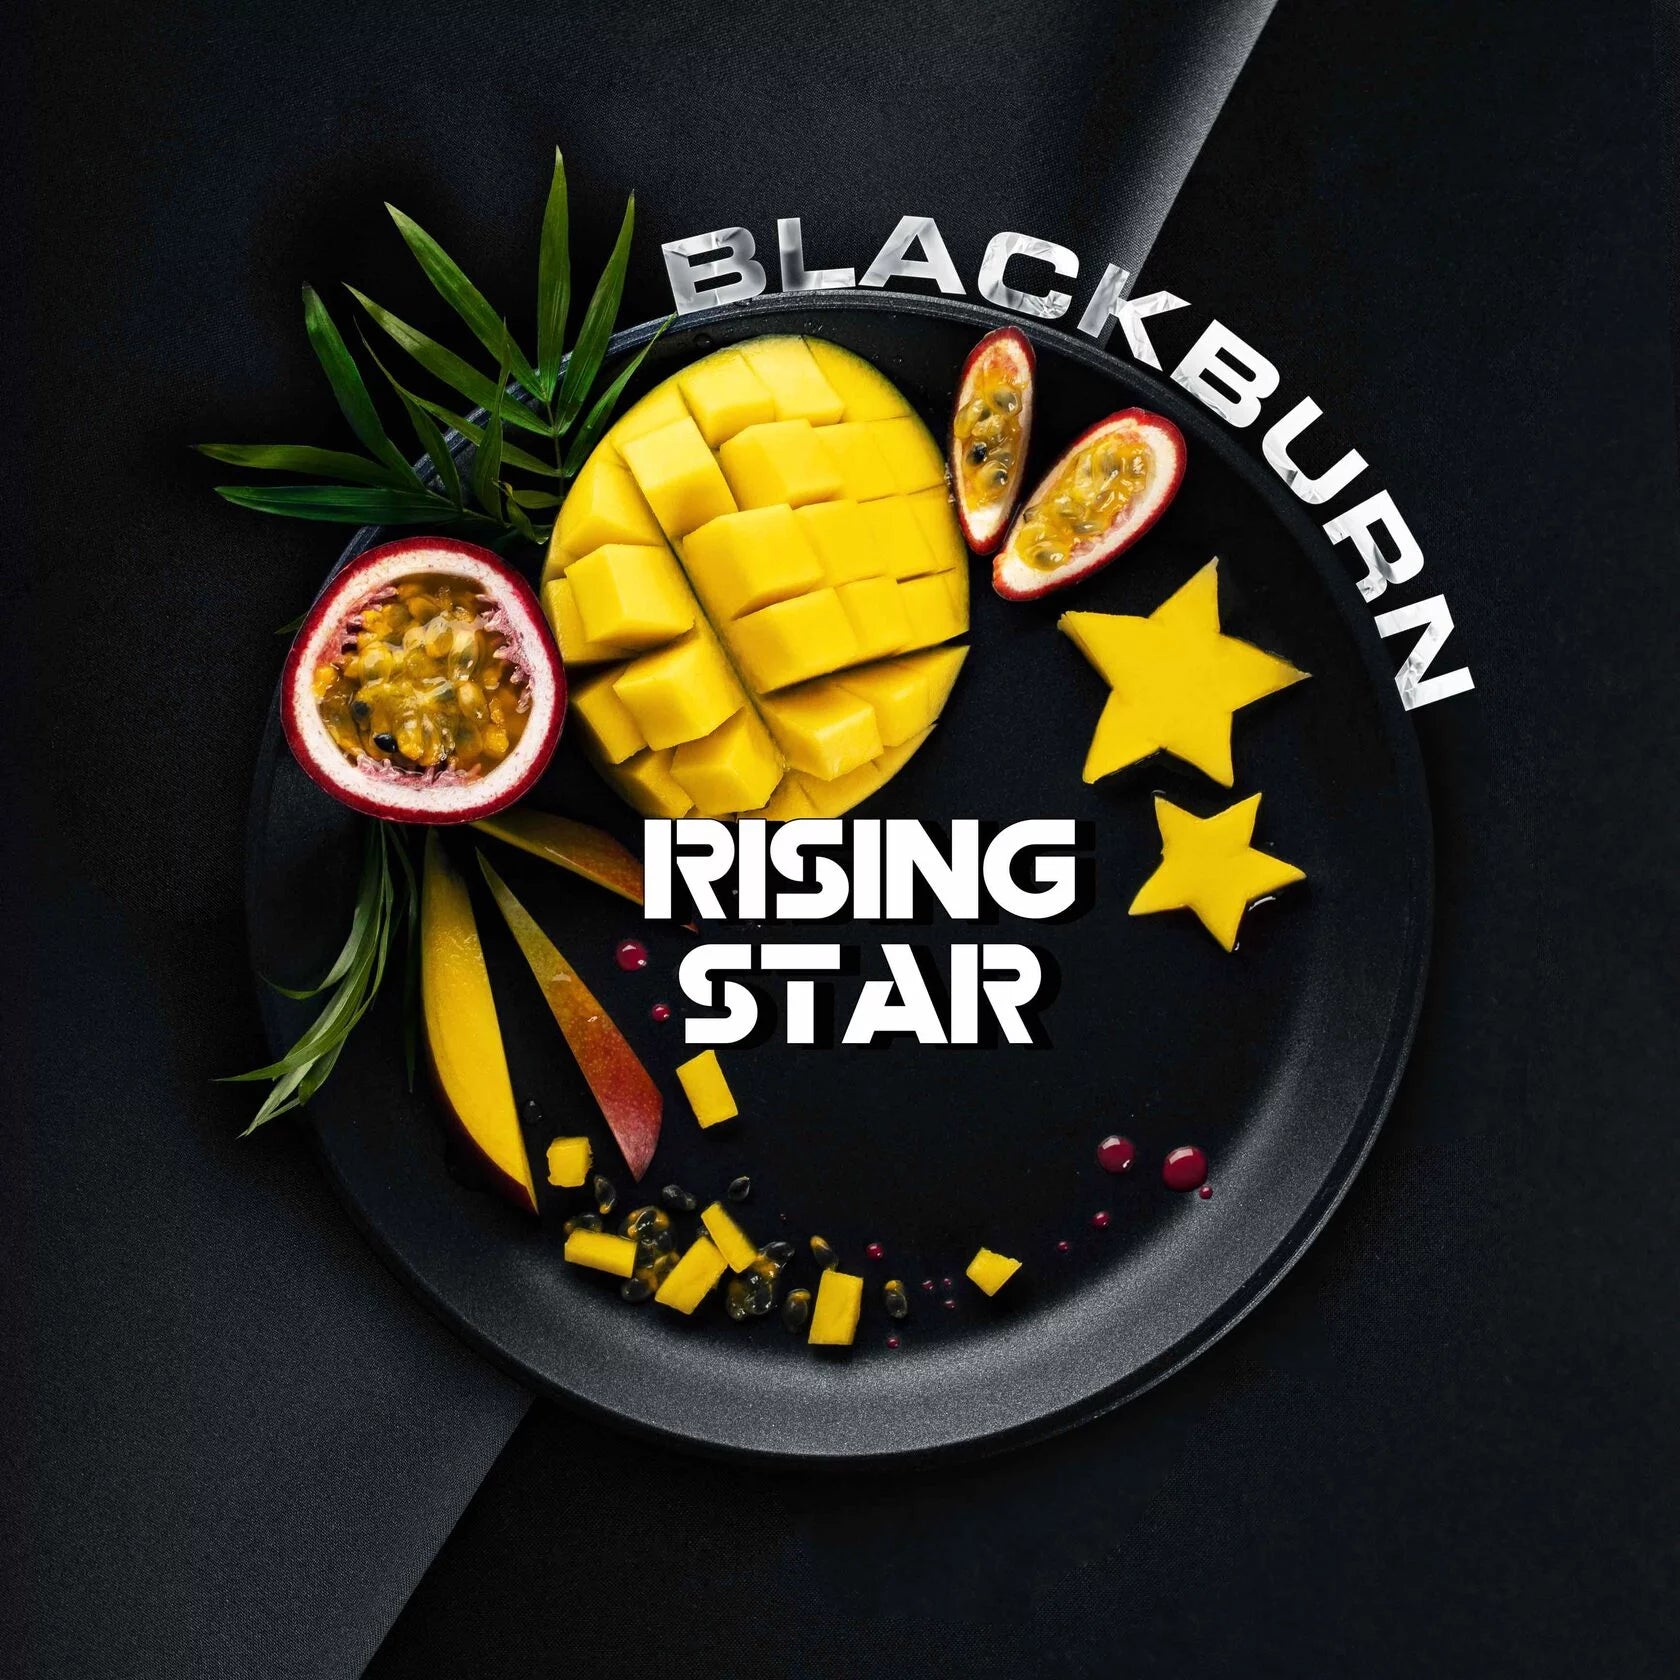 Blackburn Rising Star Hookah Flavor